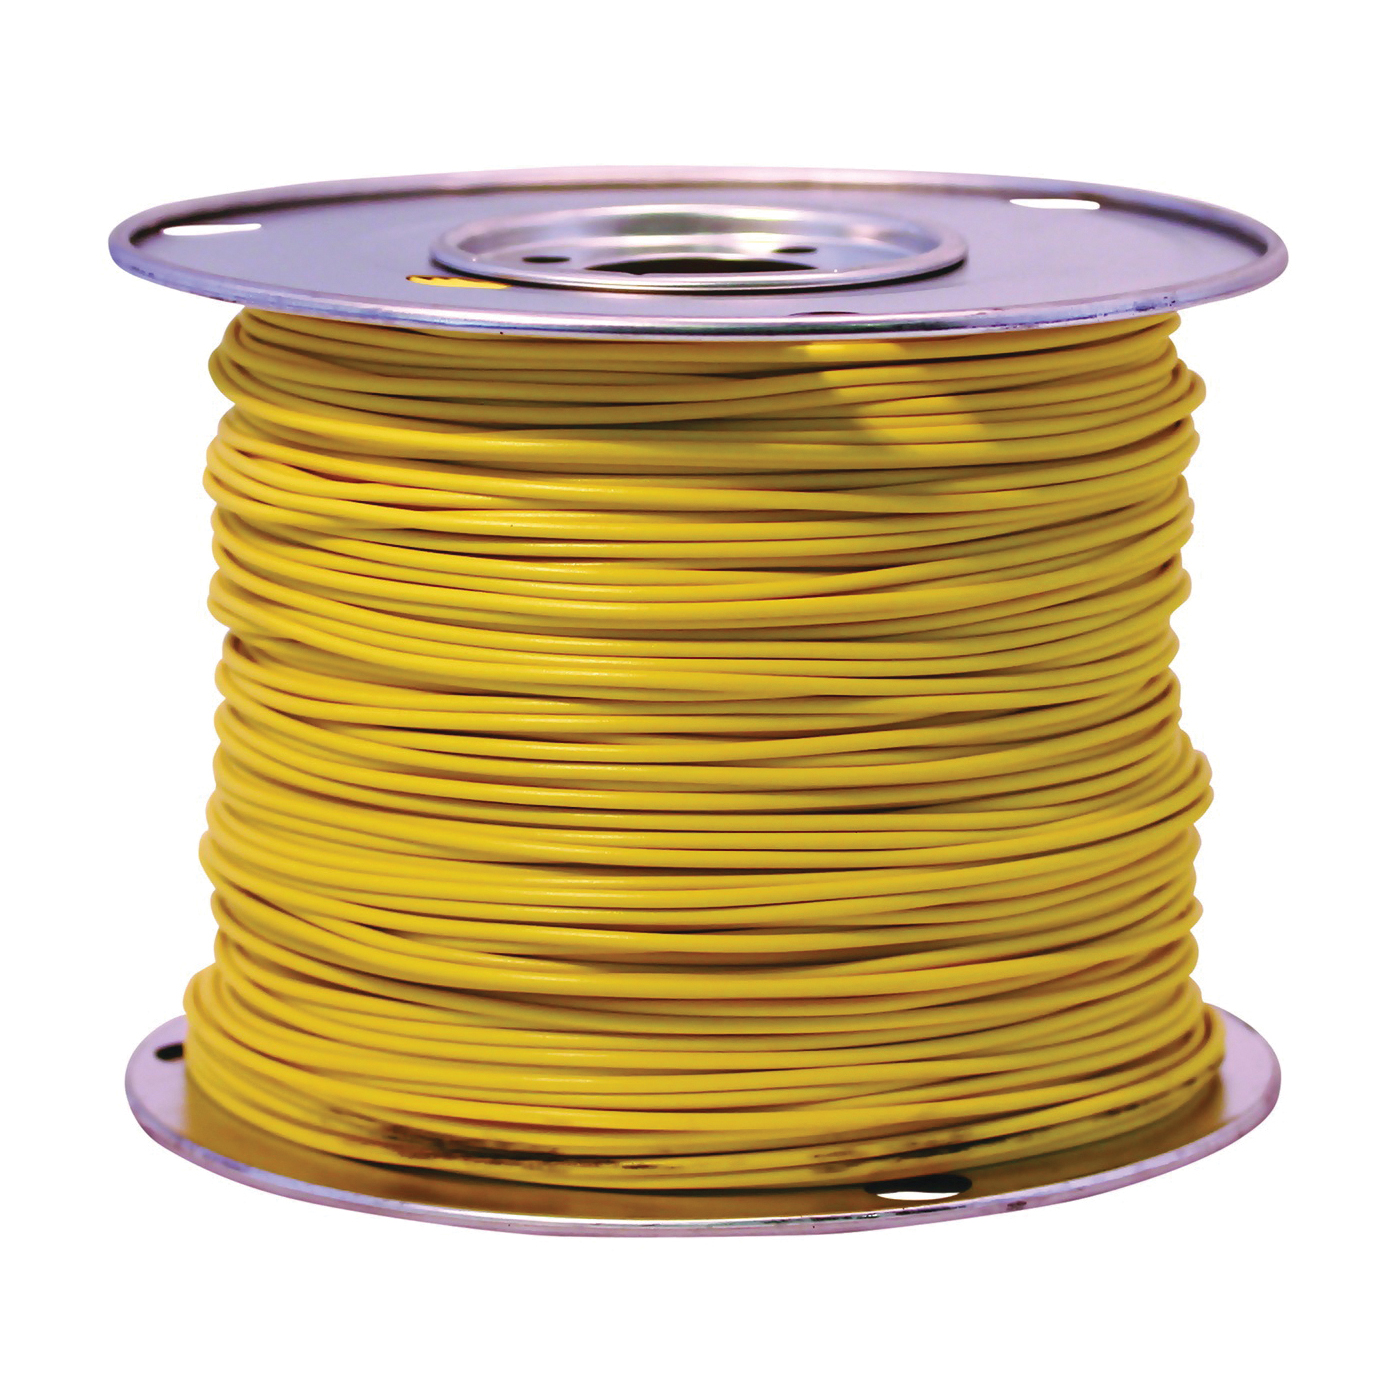 CCI 55843823 Primary Wire, 18 AWG Wire, 1-Conductor, 60 VDC, Copper Conductor, Yellow Sheath - 1